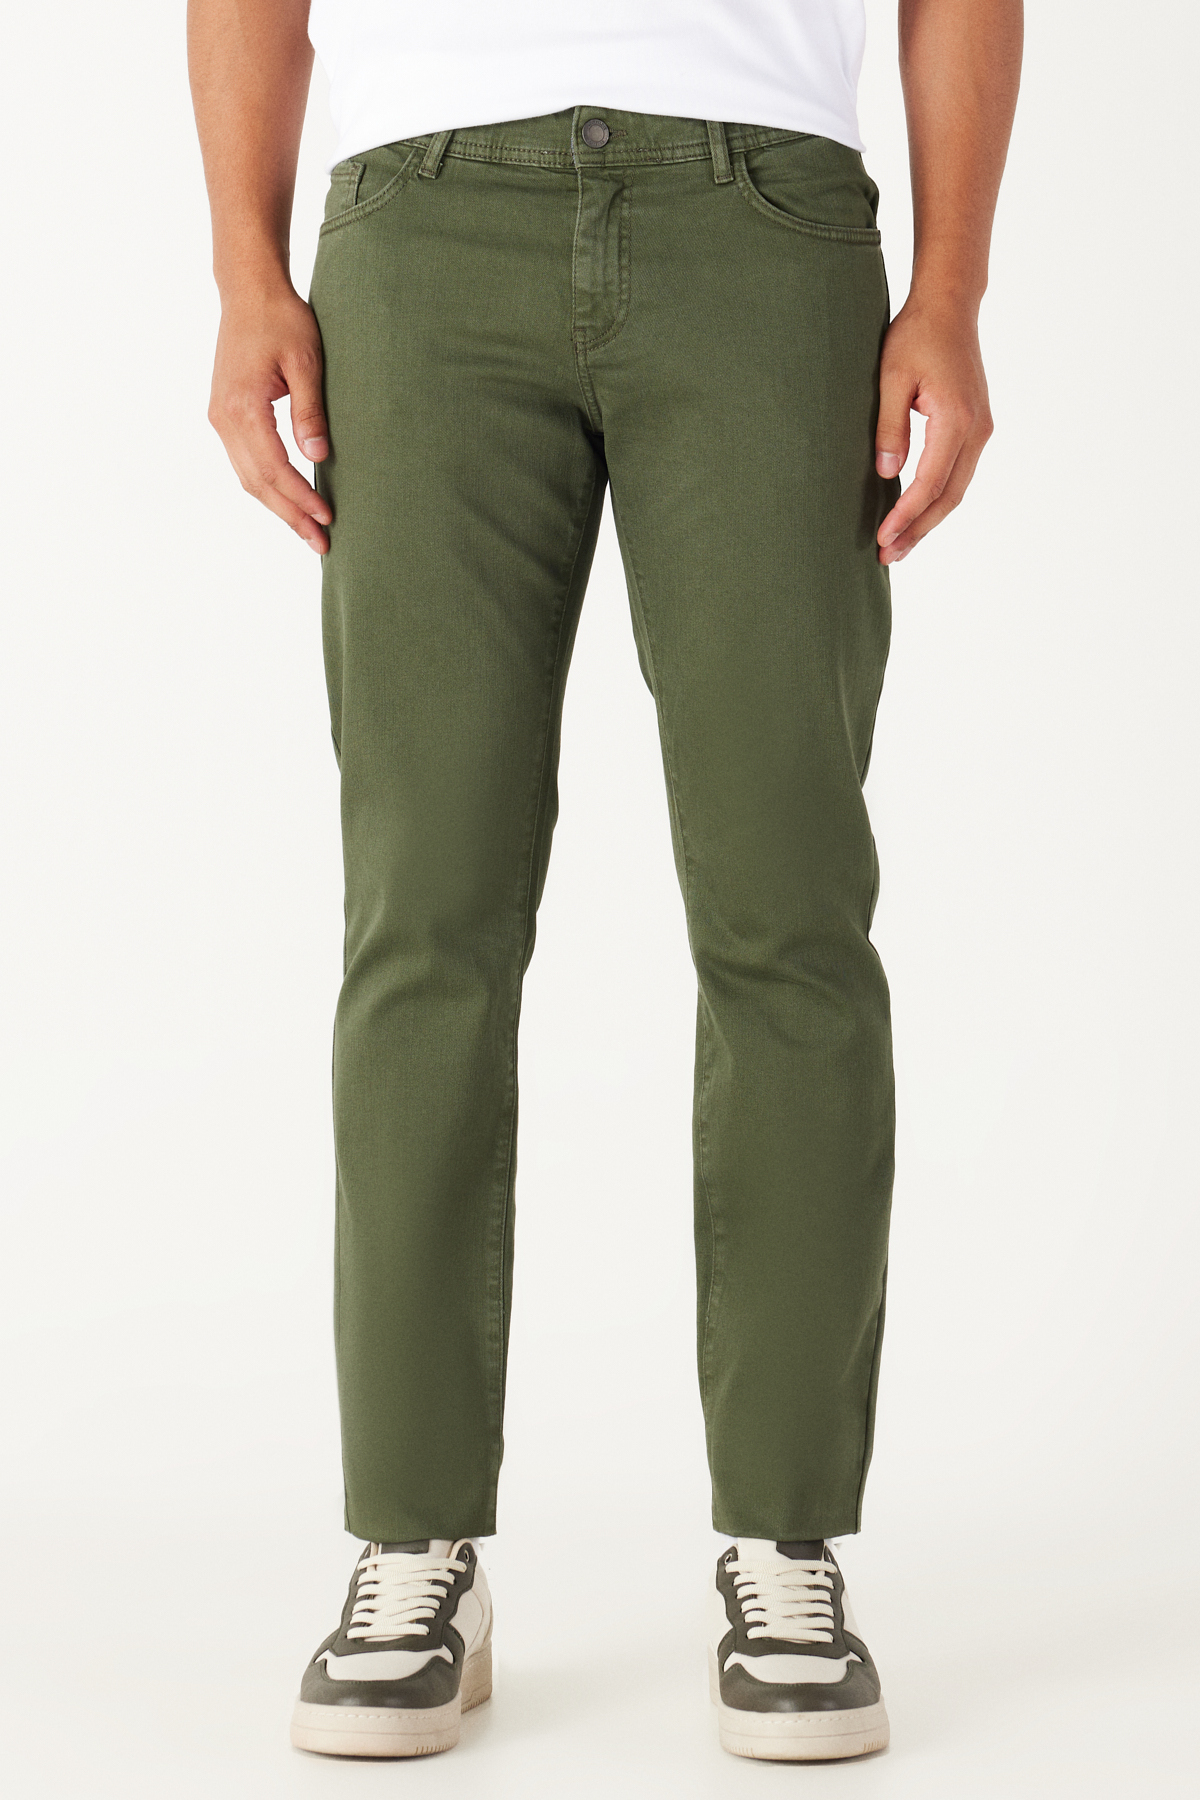 ALTINYILDIZ CLASSICS Men's Khaki 360 Degree Flexibility in All Directions. Comfortable Slim Fit Slim Fit Trousers.